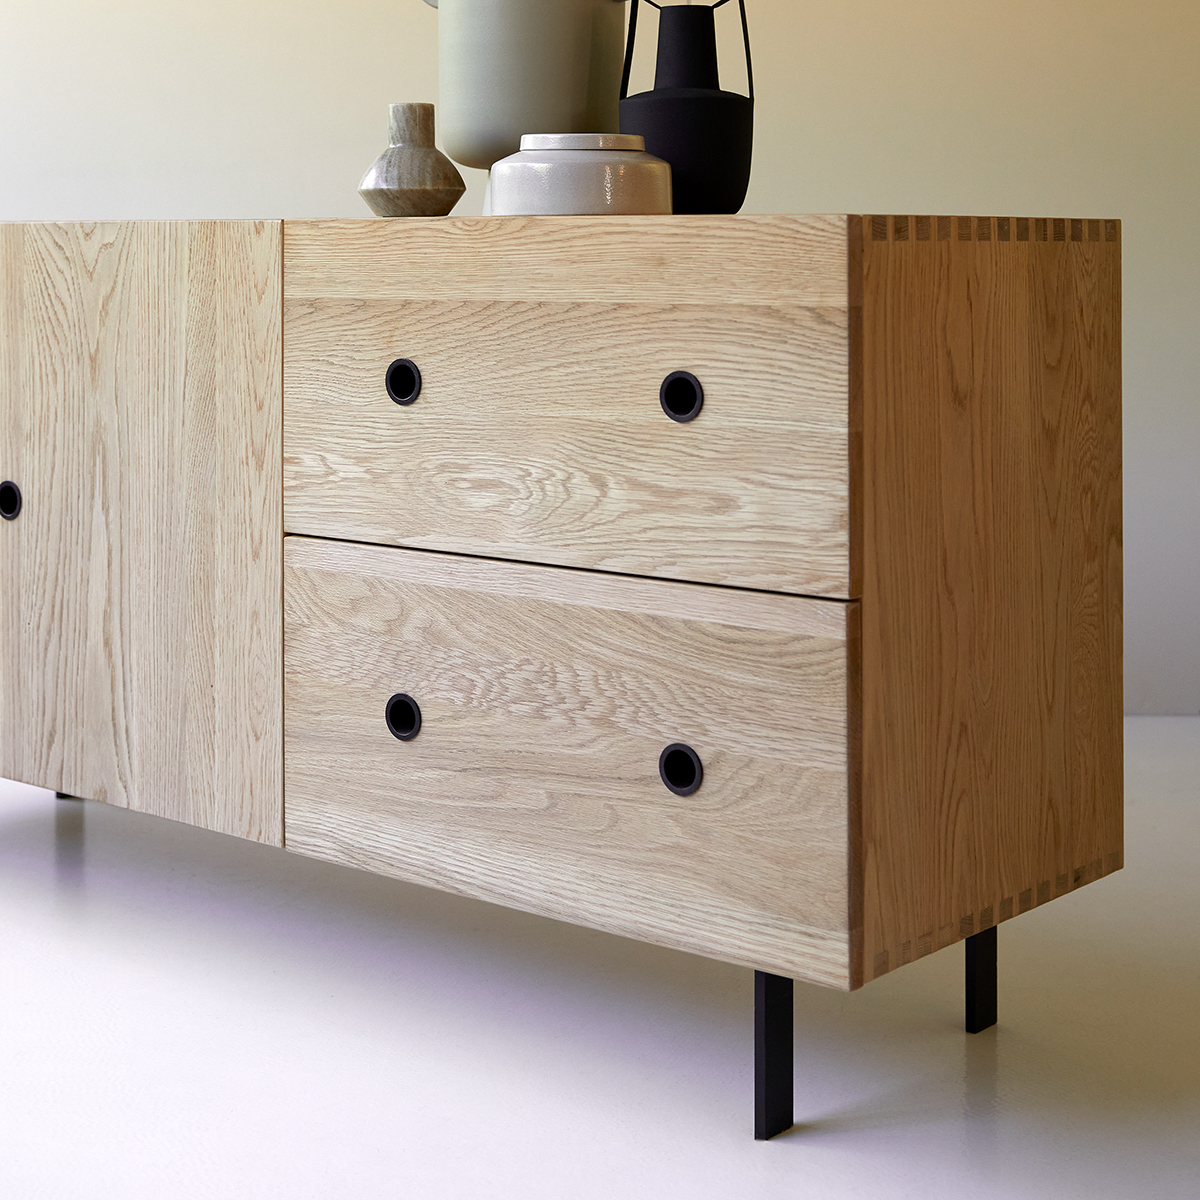 Solid oak sideboard 150 cm - Dining room storage furniture - Tikamoon